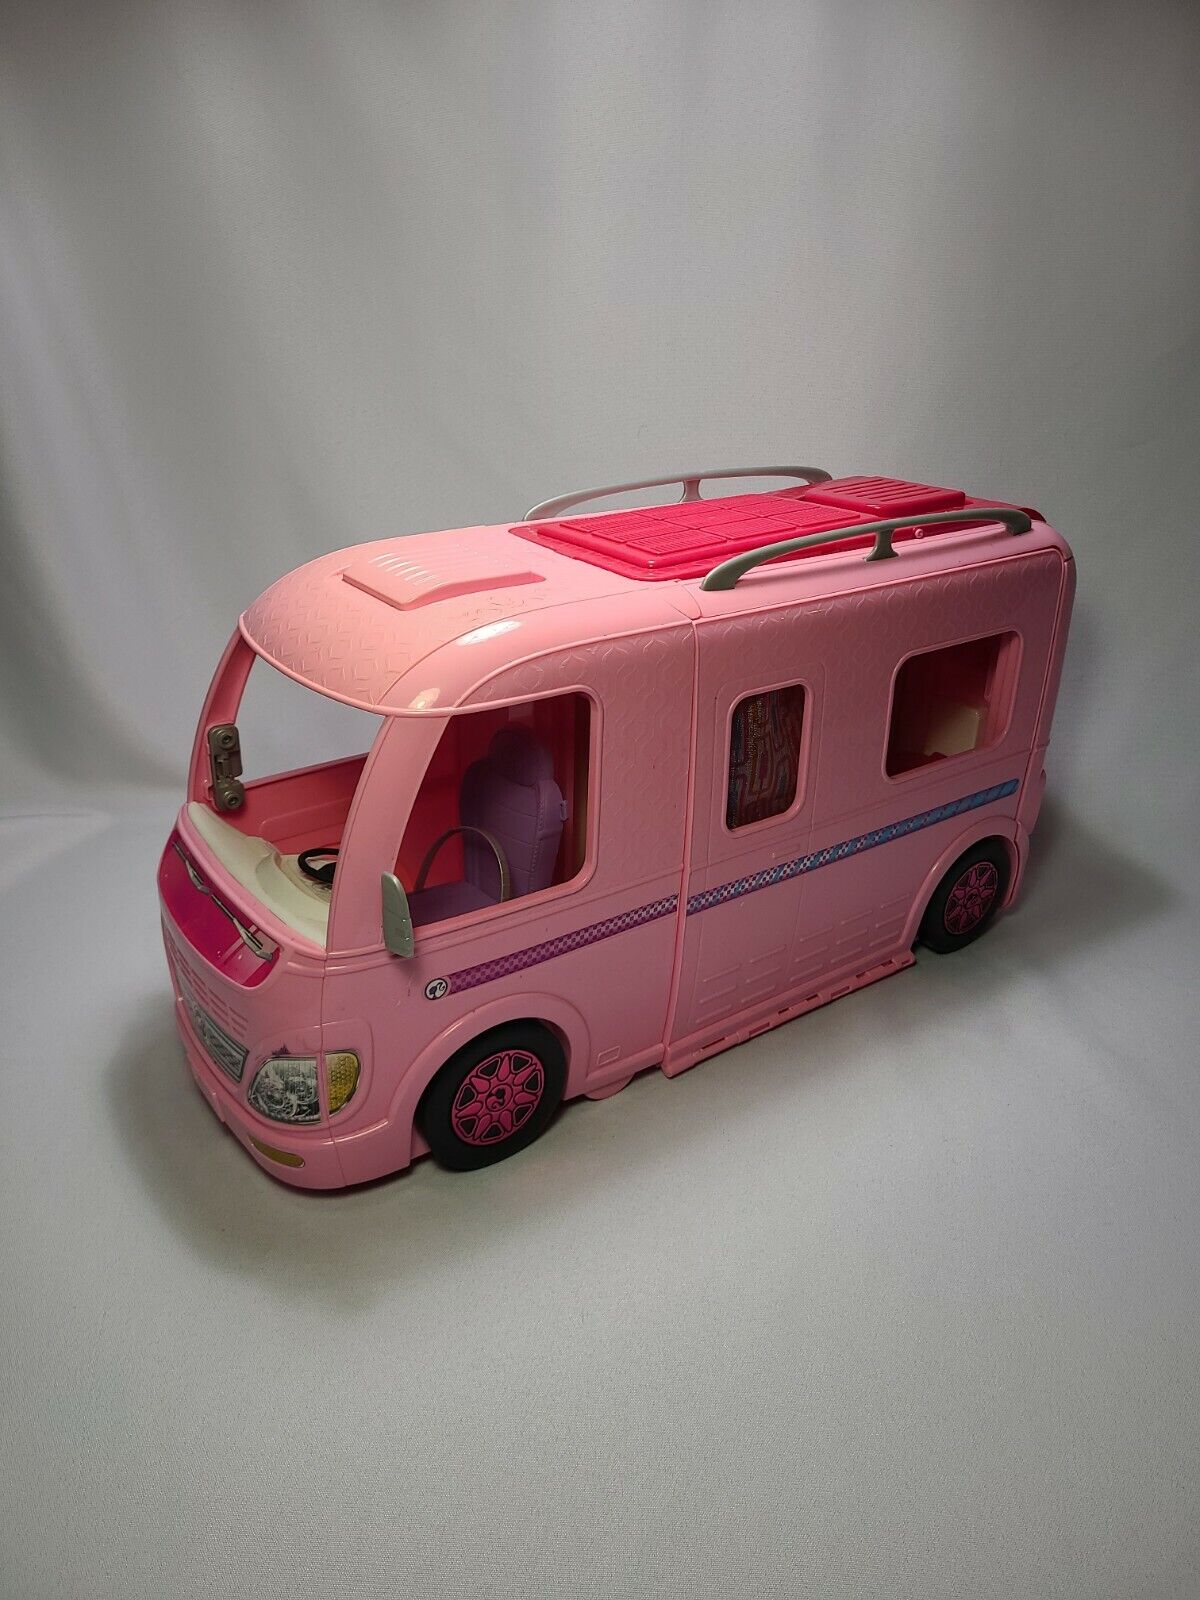 2016 Mattel Barbie Playset Expandable Bus Dream Camper Motorhome Dedication Bargain sale